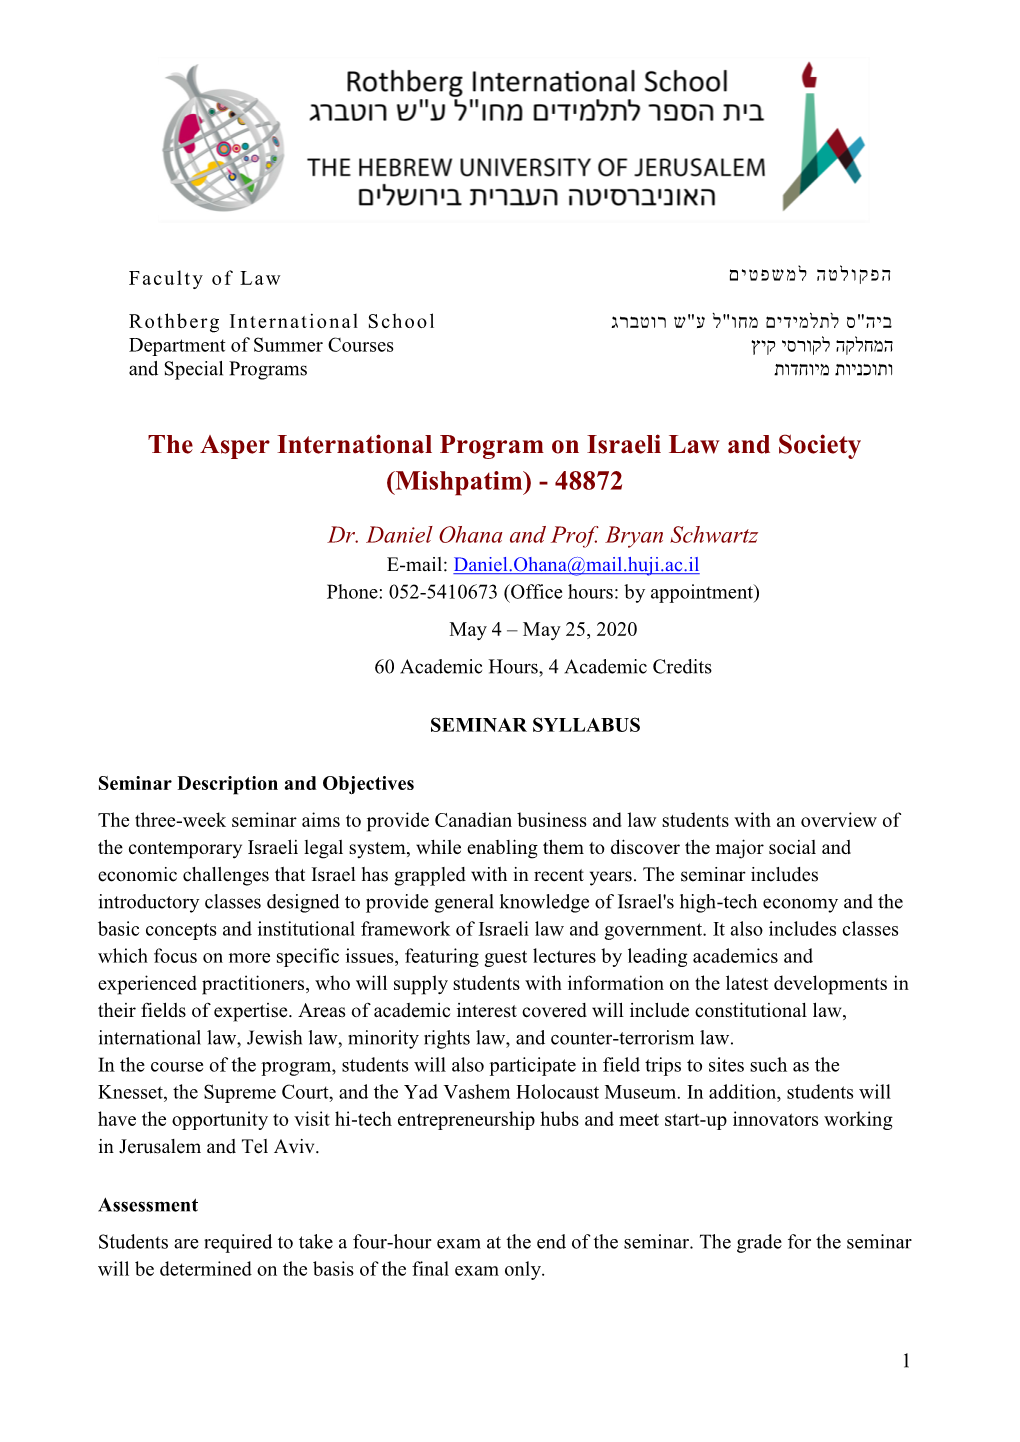 The Asper International Program on Israeli Law and Society (Mishpatim) - 48872